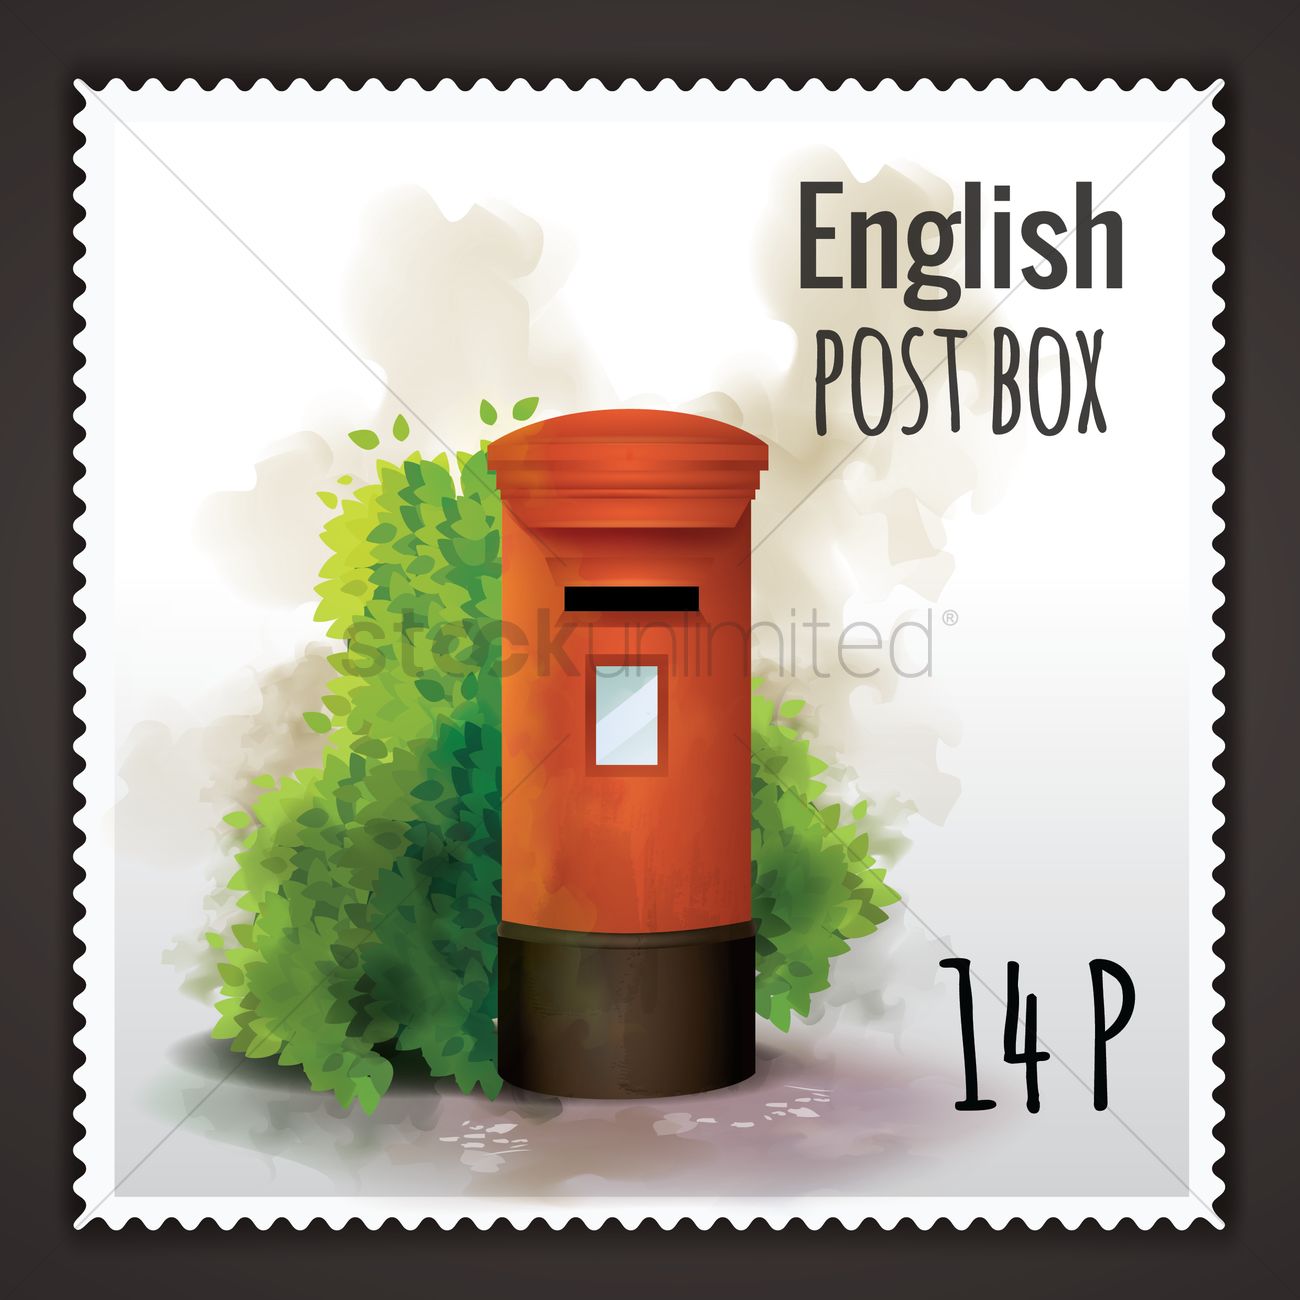 English post box